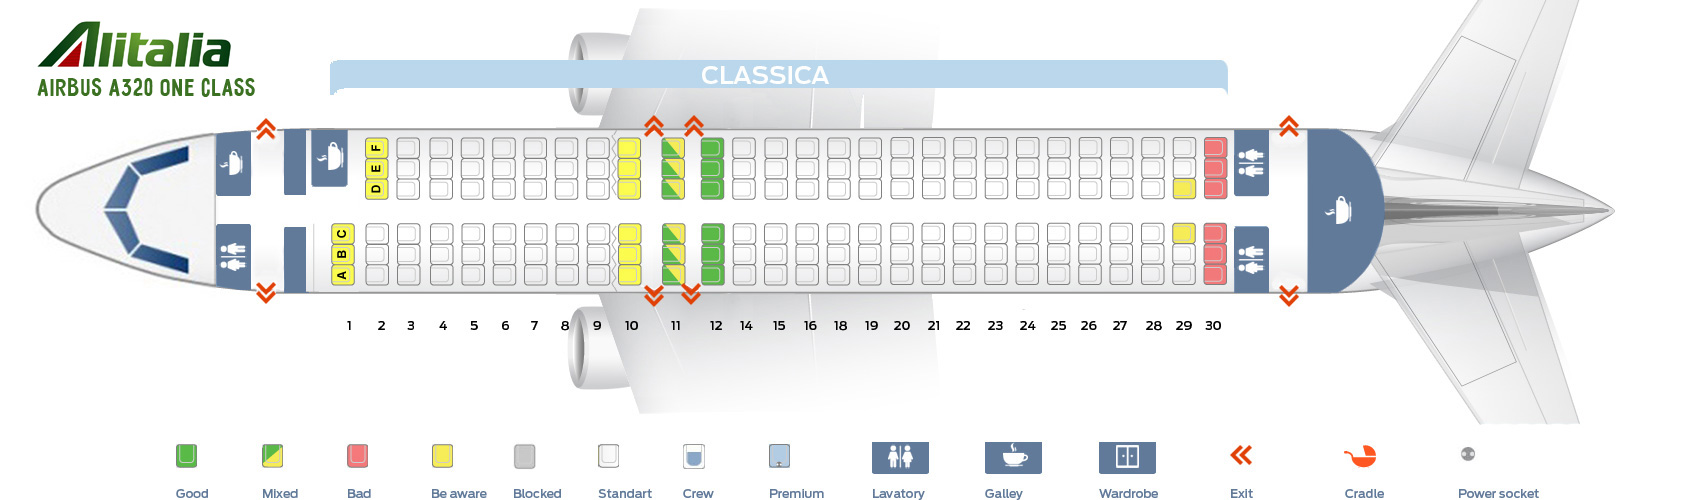 Alitalia Flight Seating Chart